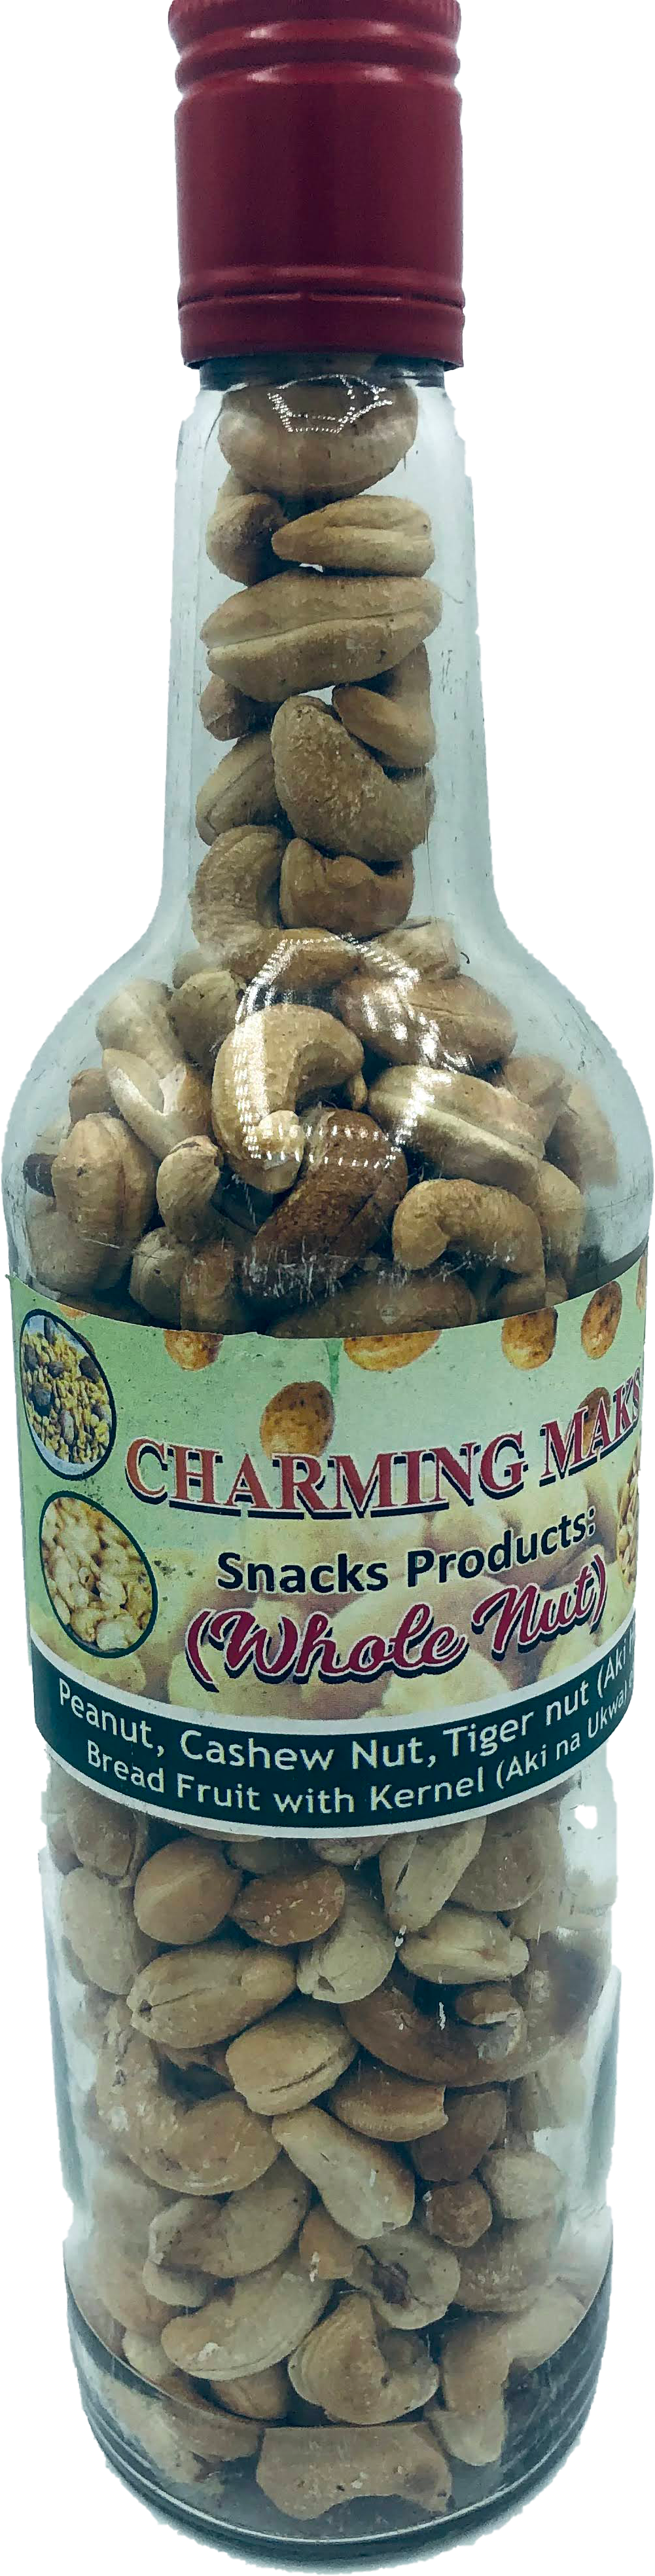 Charming Maks Cashew Nut